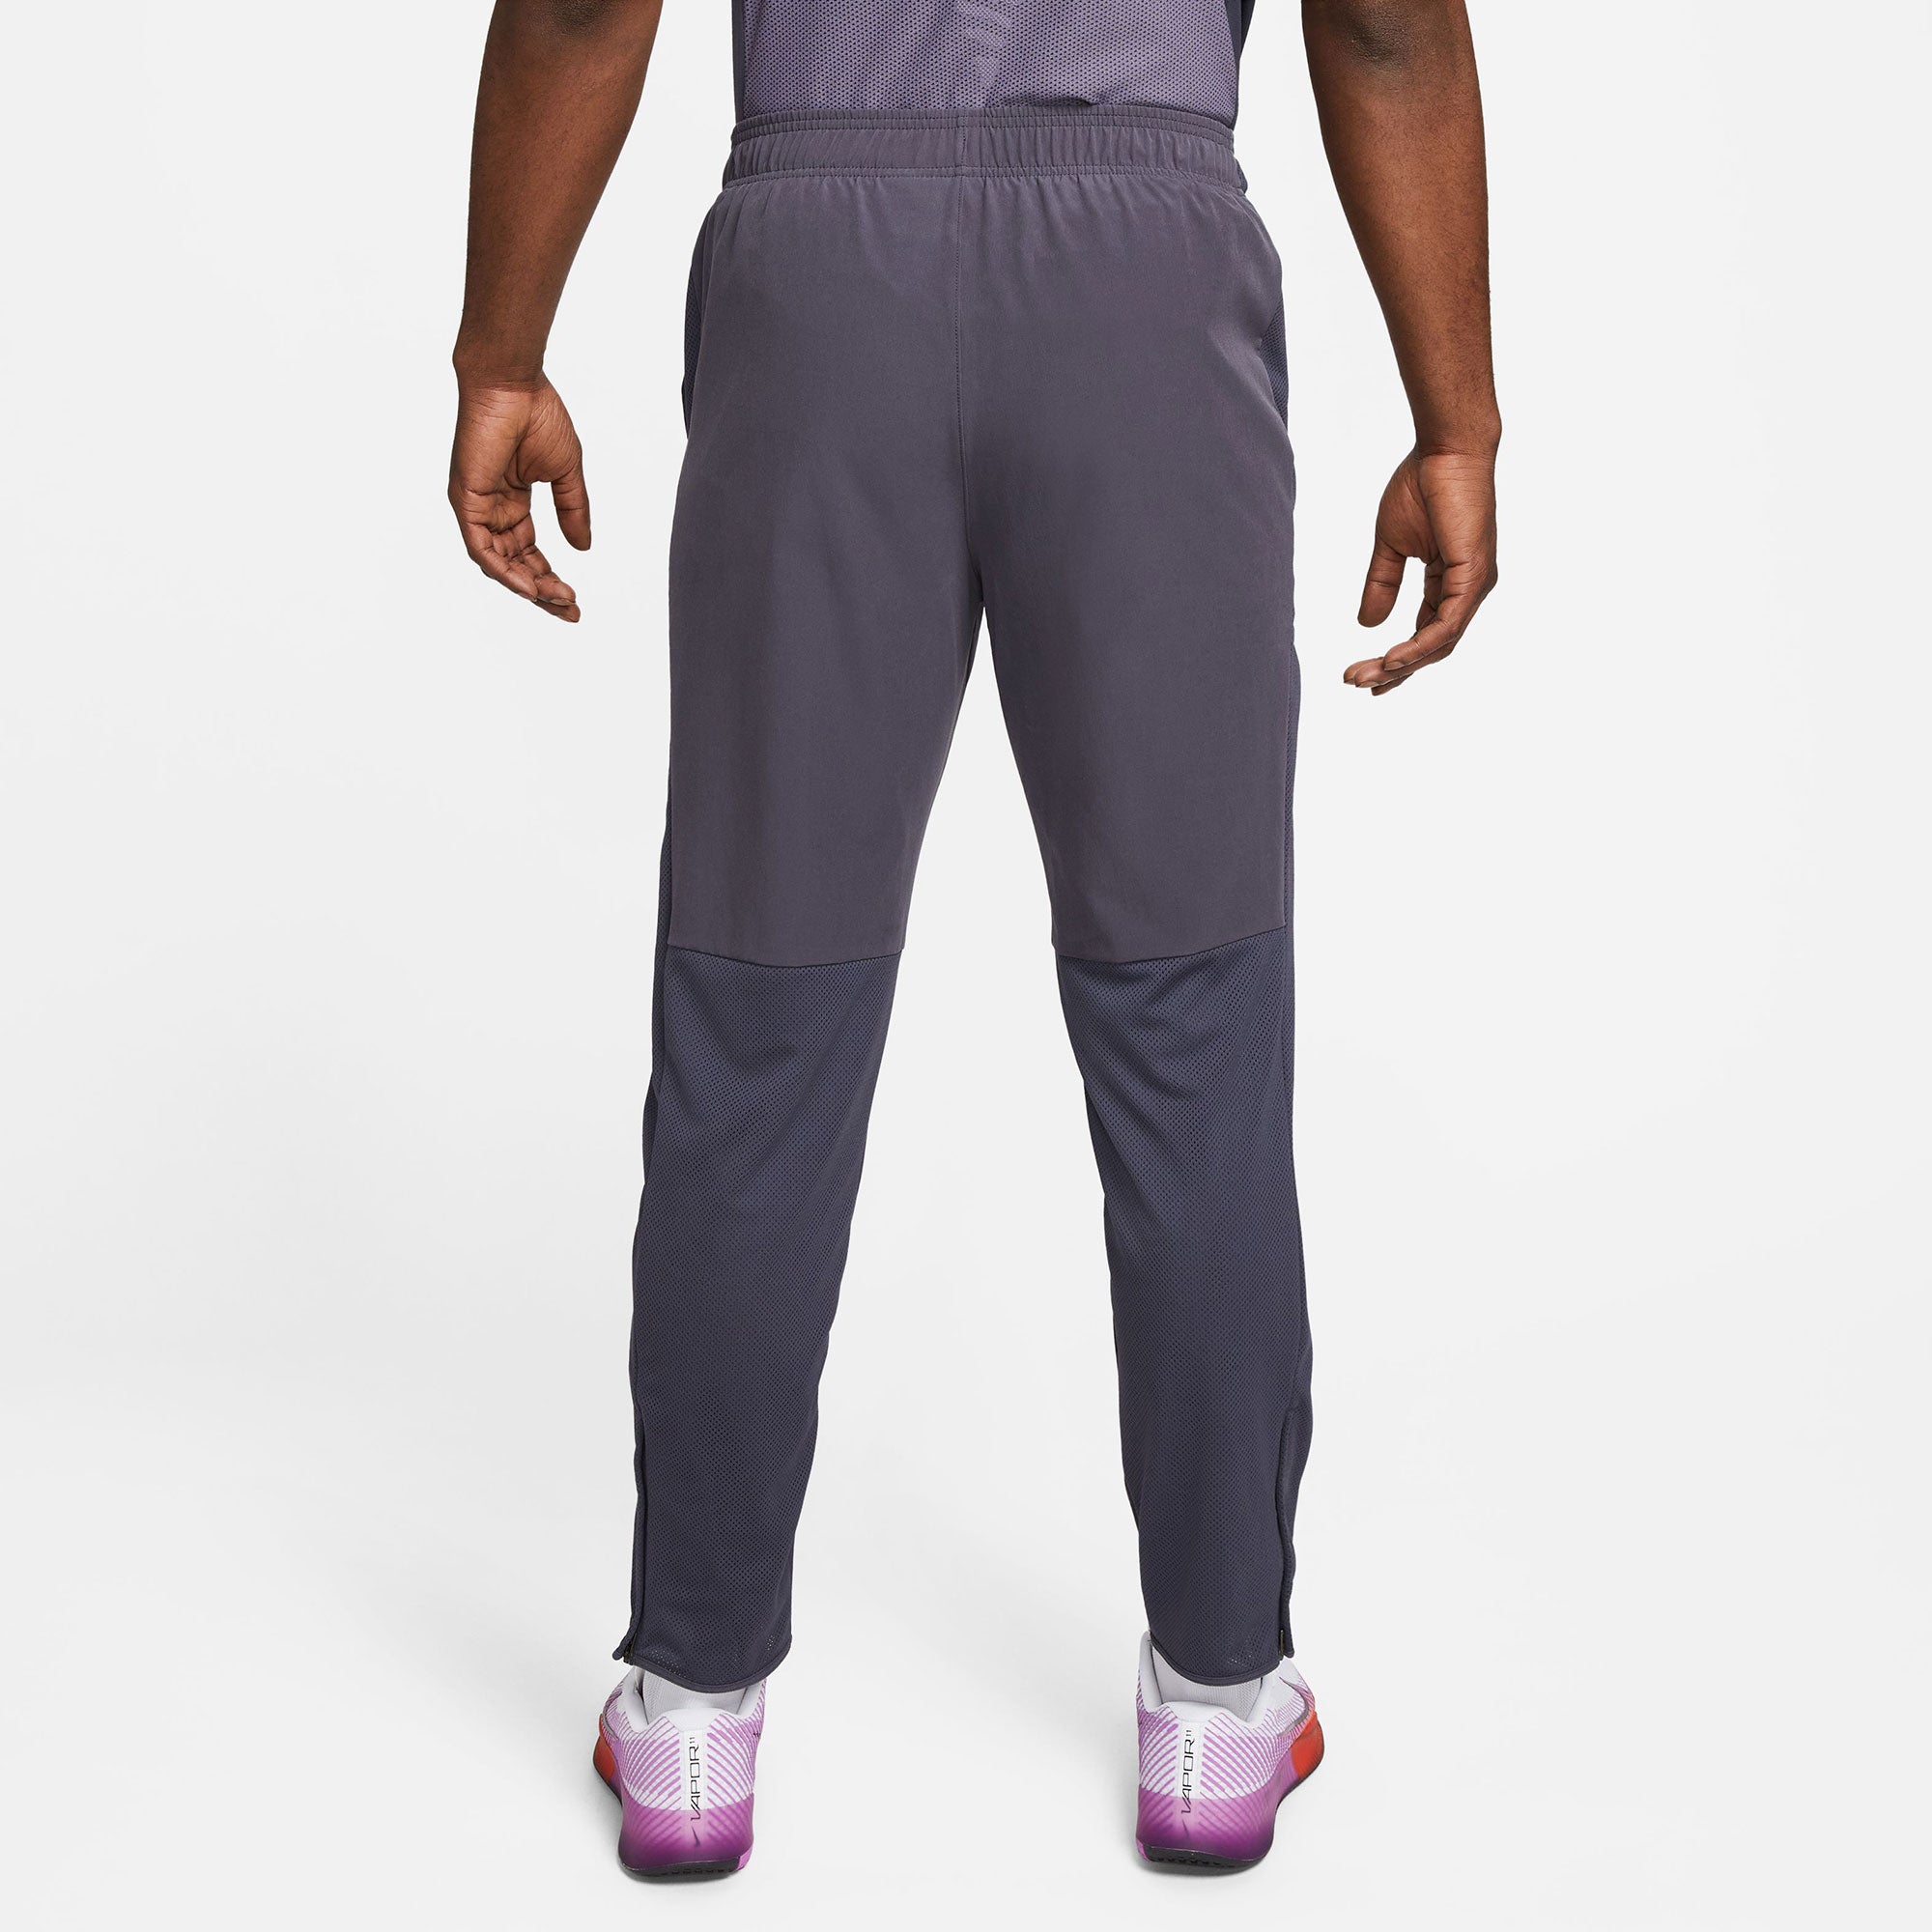 NikeCourt Advantage Men's Tennis Pants Grey (2)